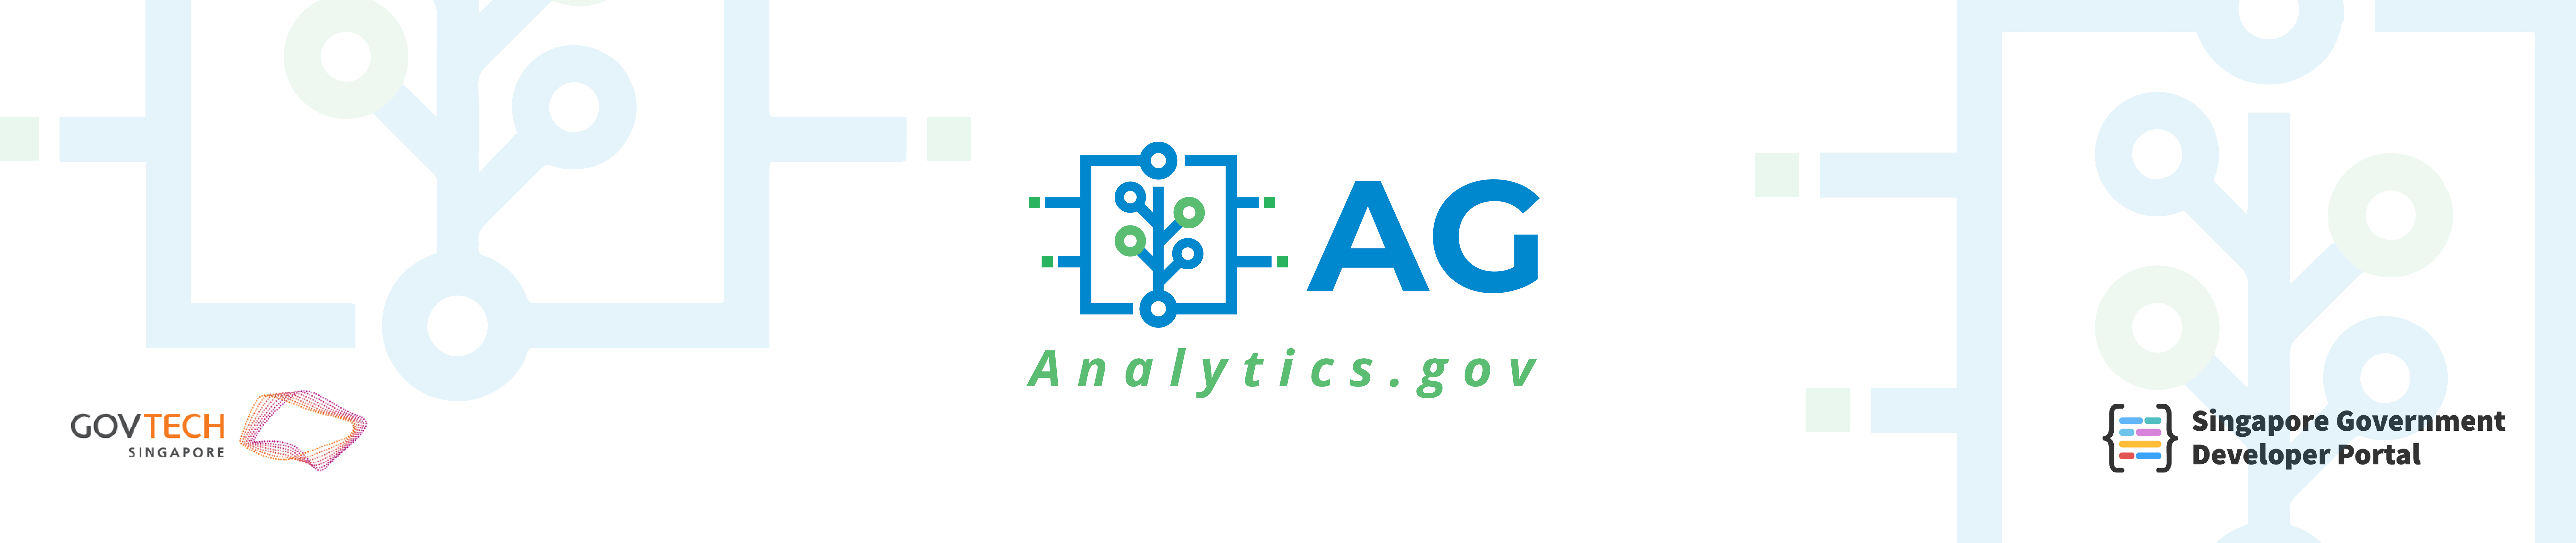 Analytics.gov header banner